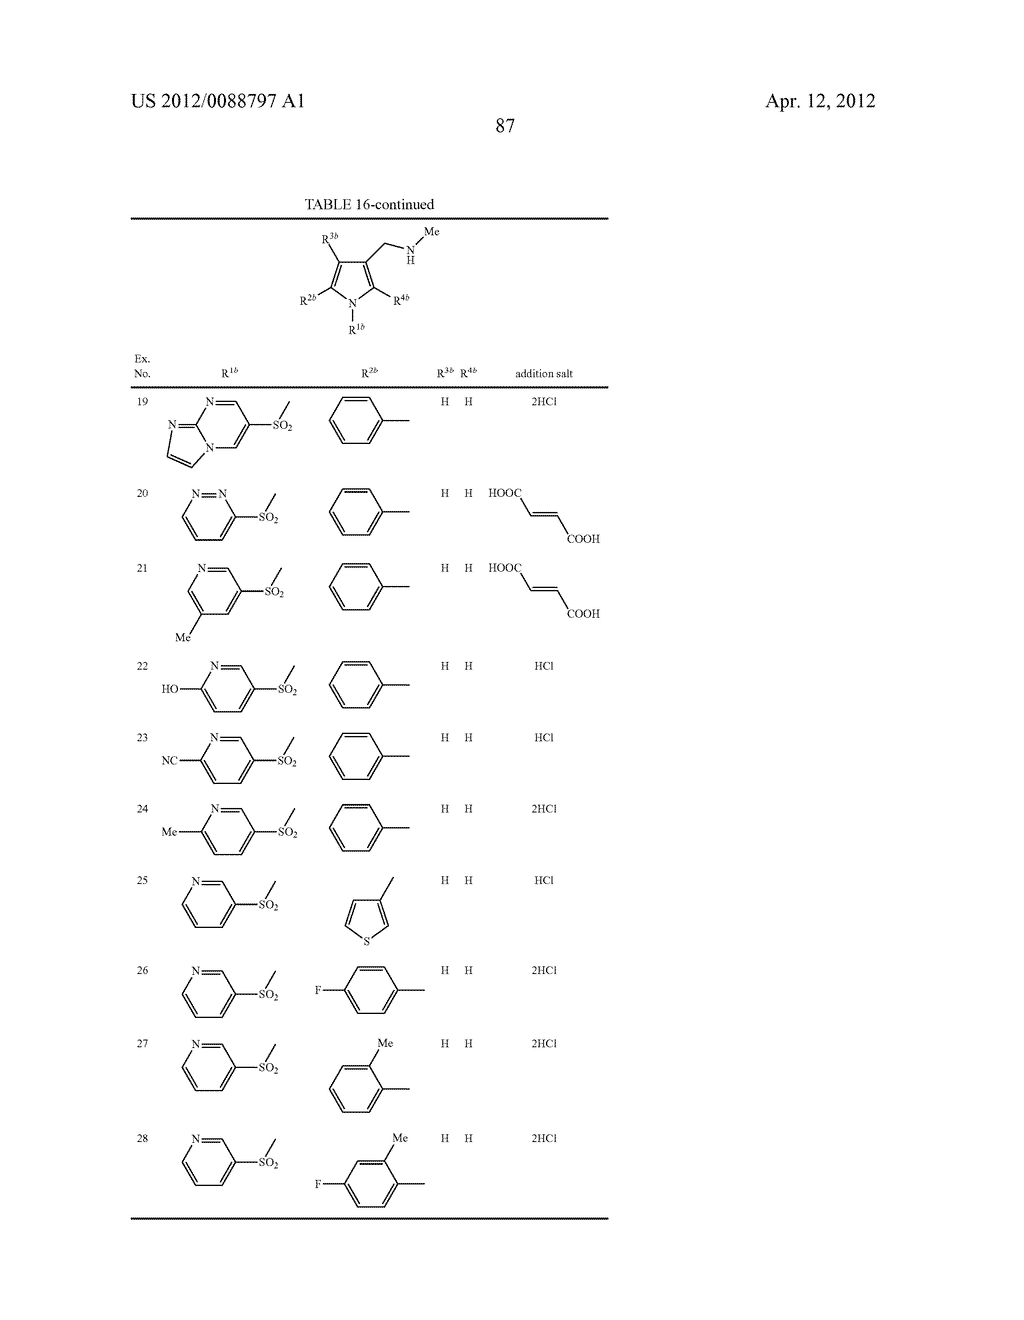 1-HETEROCYCLYLSULFONYL, 3-AMINOMETHYL, 5- (HETERO-) ARYL SUBSTITUTED     1-H-PYRROLE DERIVATIVES AS ACID SECRETION INHIBITORS - diagram, schematic, and image 88